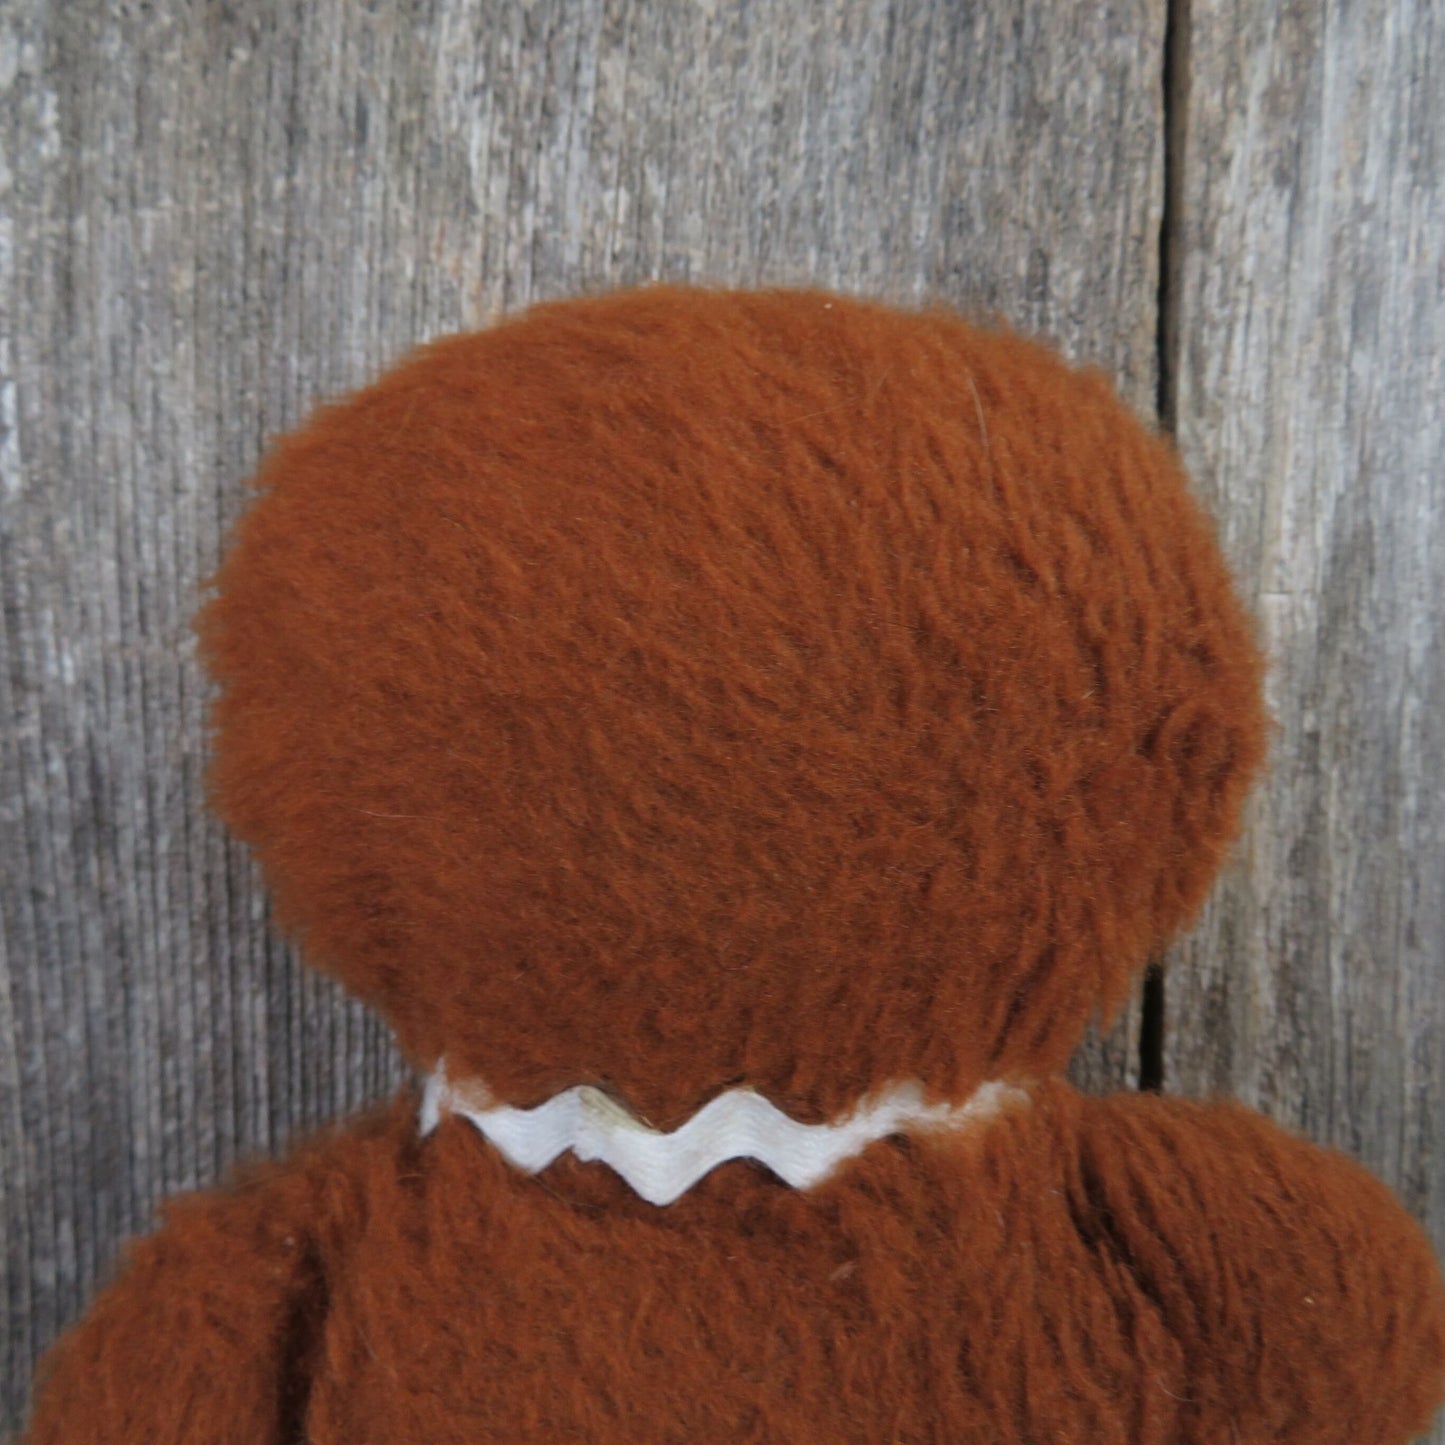 Vintage Gingerbread Man Plush Russ Berrie 1974 Sand Filled Stuffed Animal Christmas